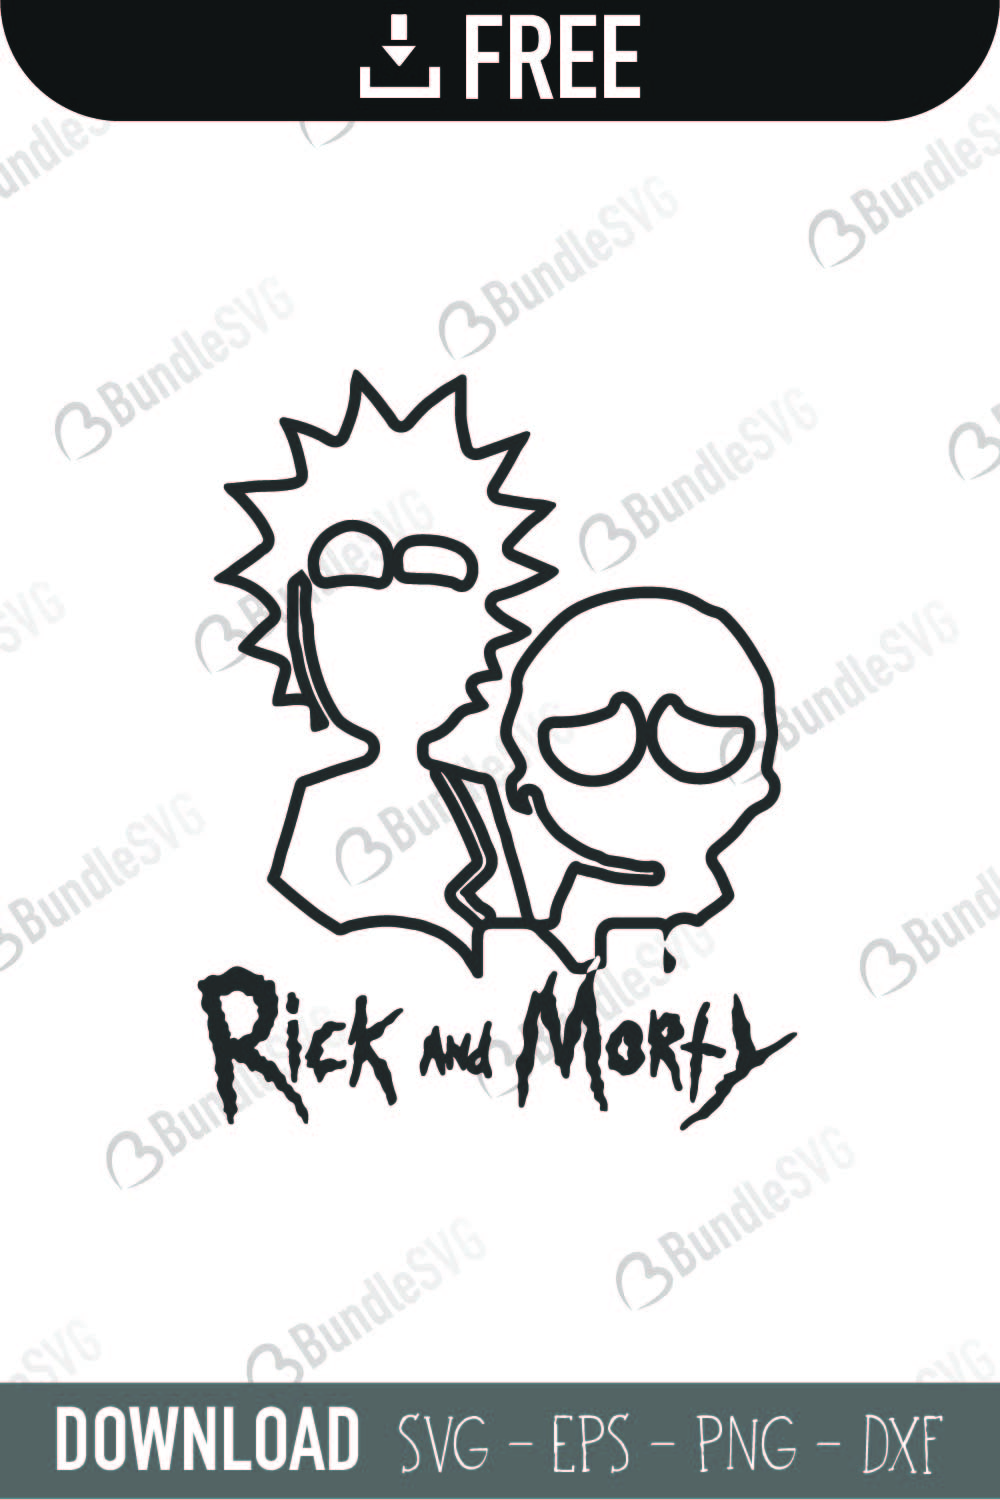 Rick And Morty Svg Cut Files Free Download Bundlesvg